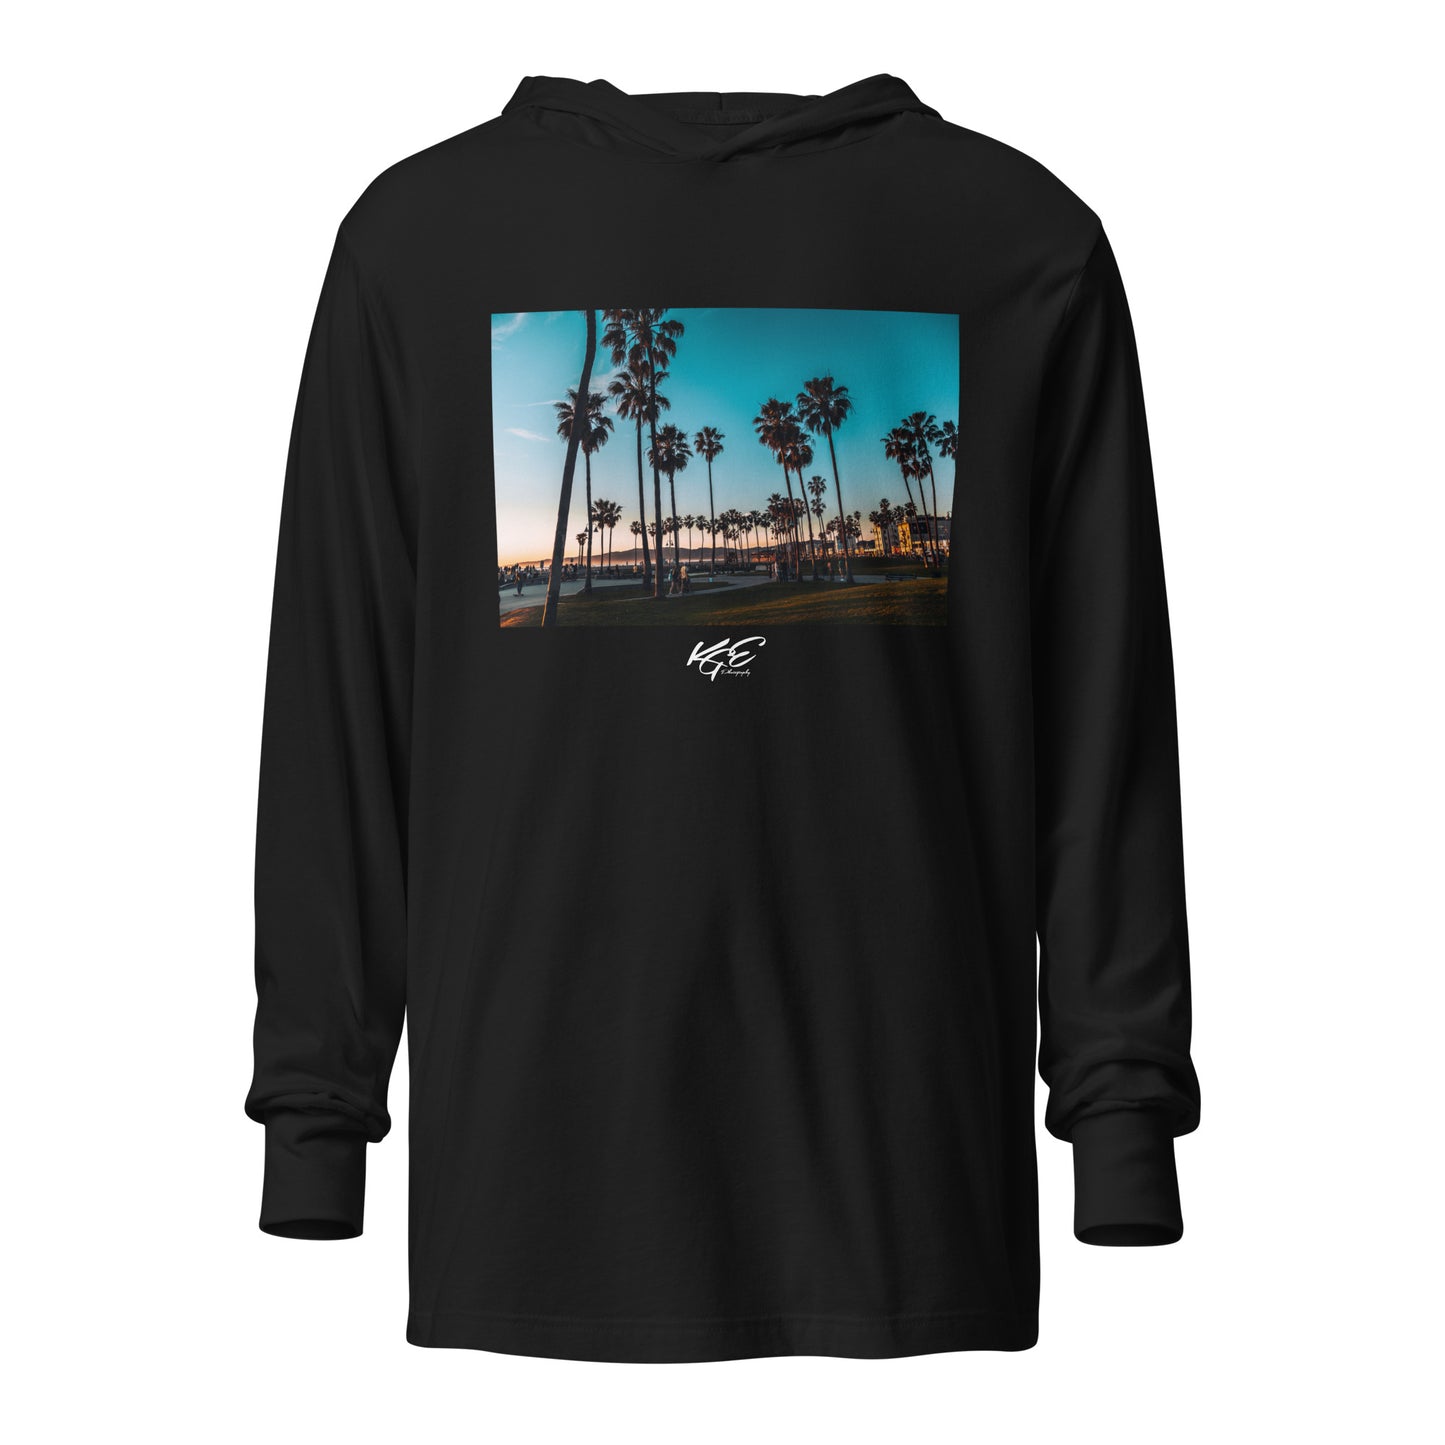 (New) California Beach Vibes - KGE PHOTOGRAPHY Hooded long-sleeve premium tee